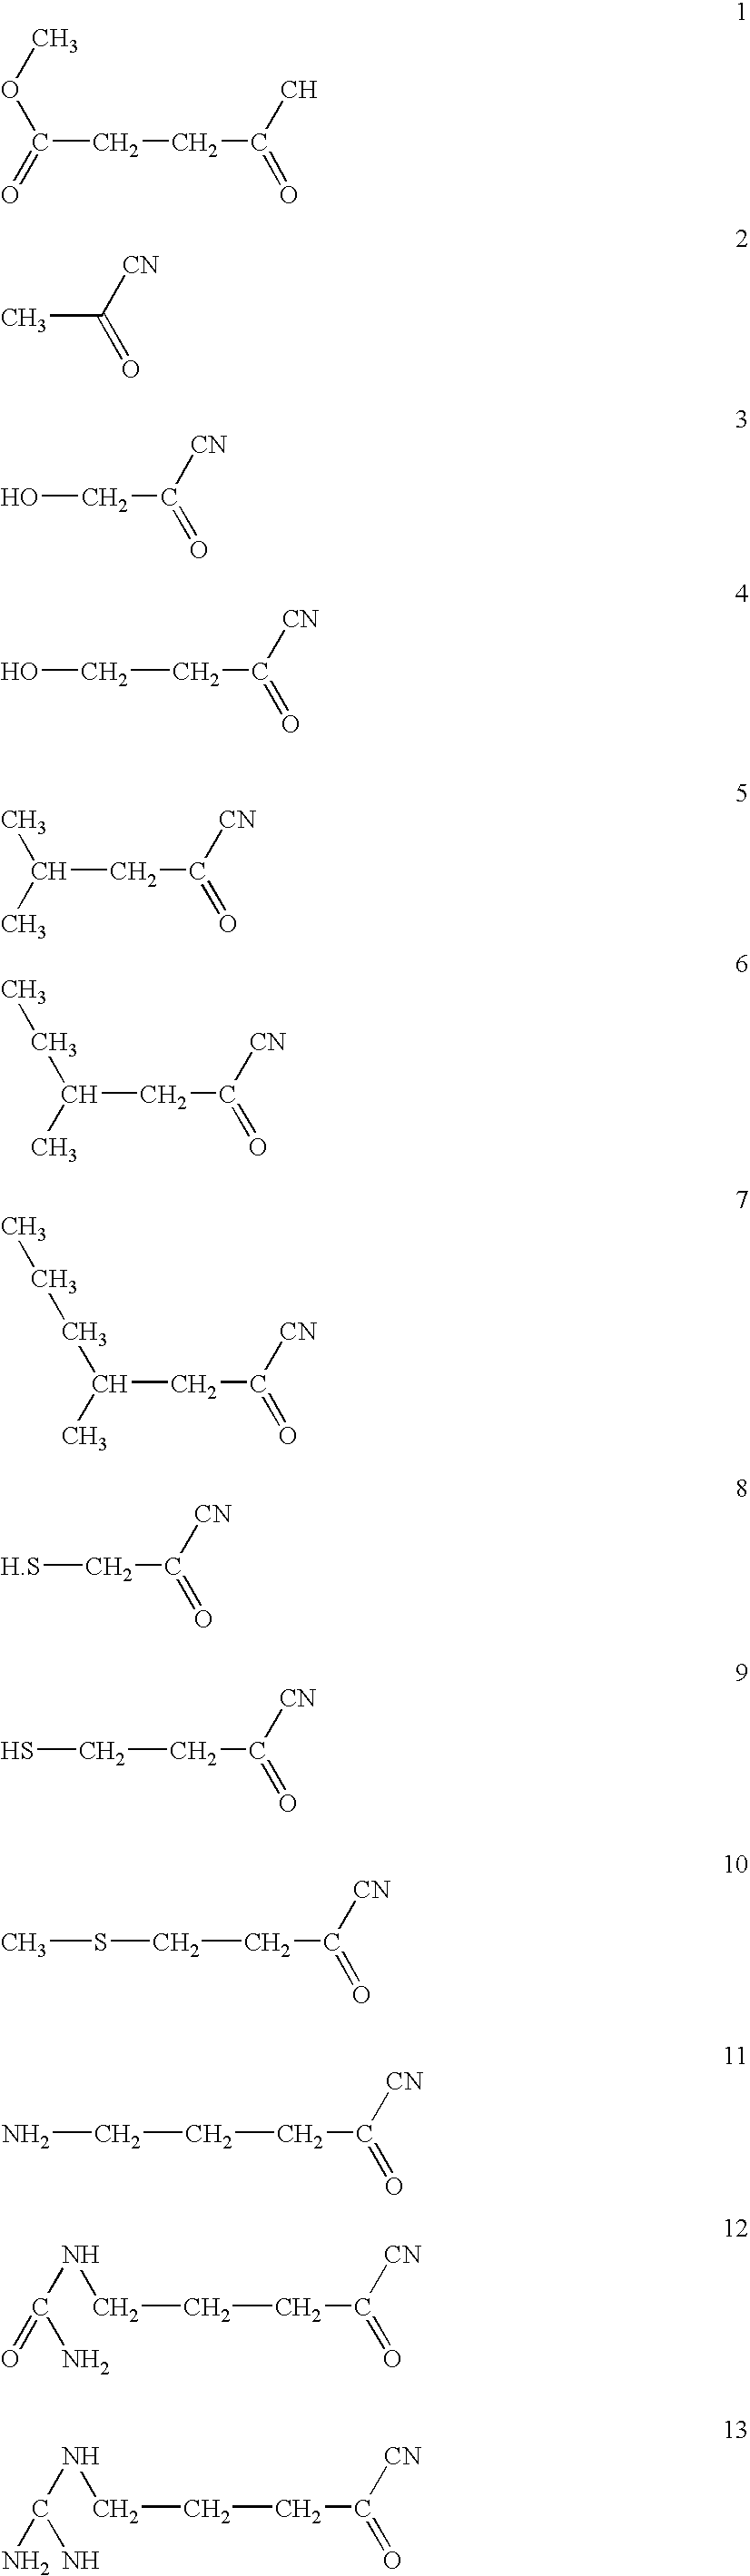 Use of sugar phosphates, sugar phosphate analog, amino acids, amino acid analogs for modulating transaminases and/or the association of p36/ malate dehydrogenase